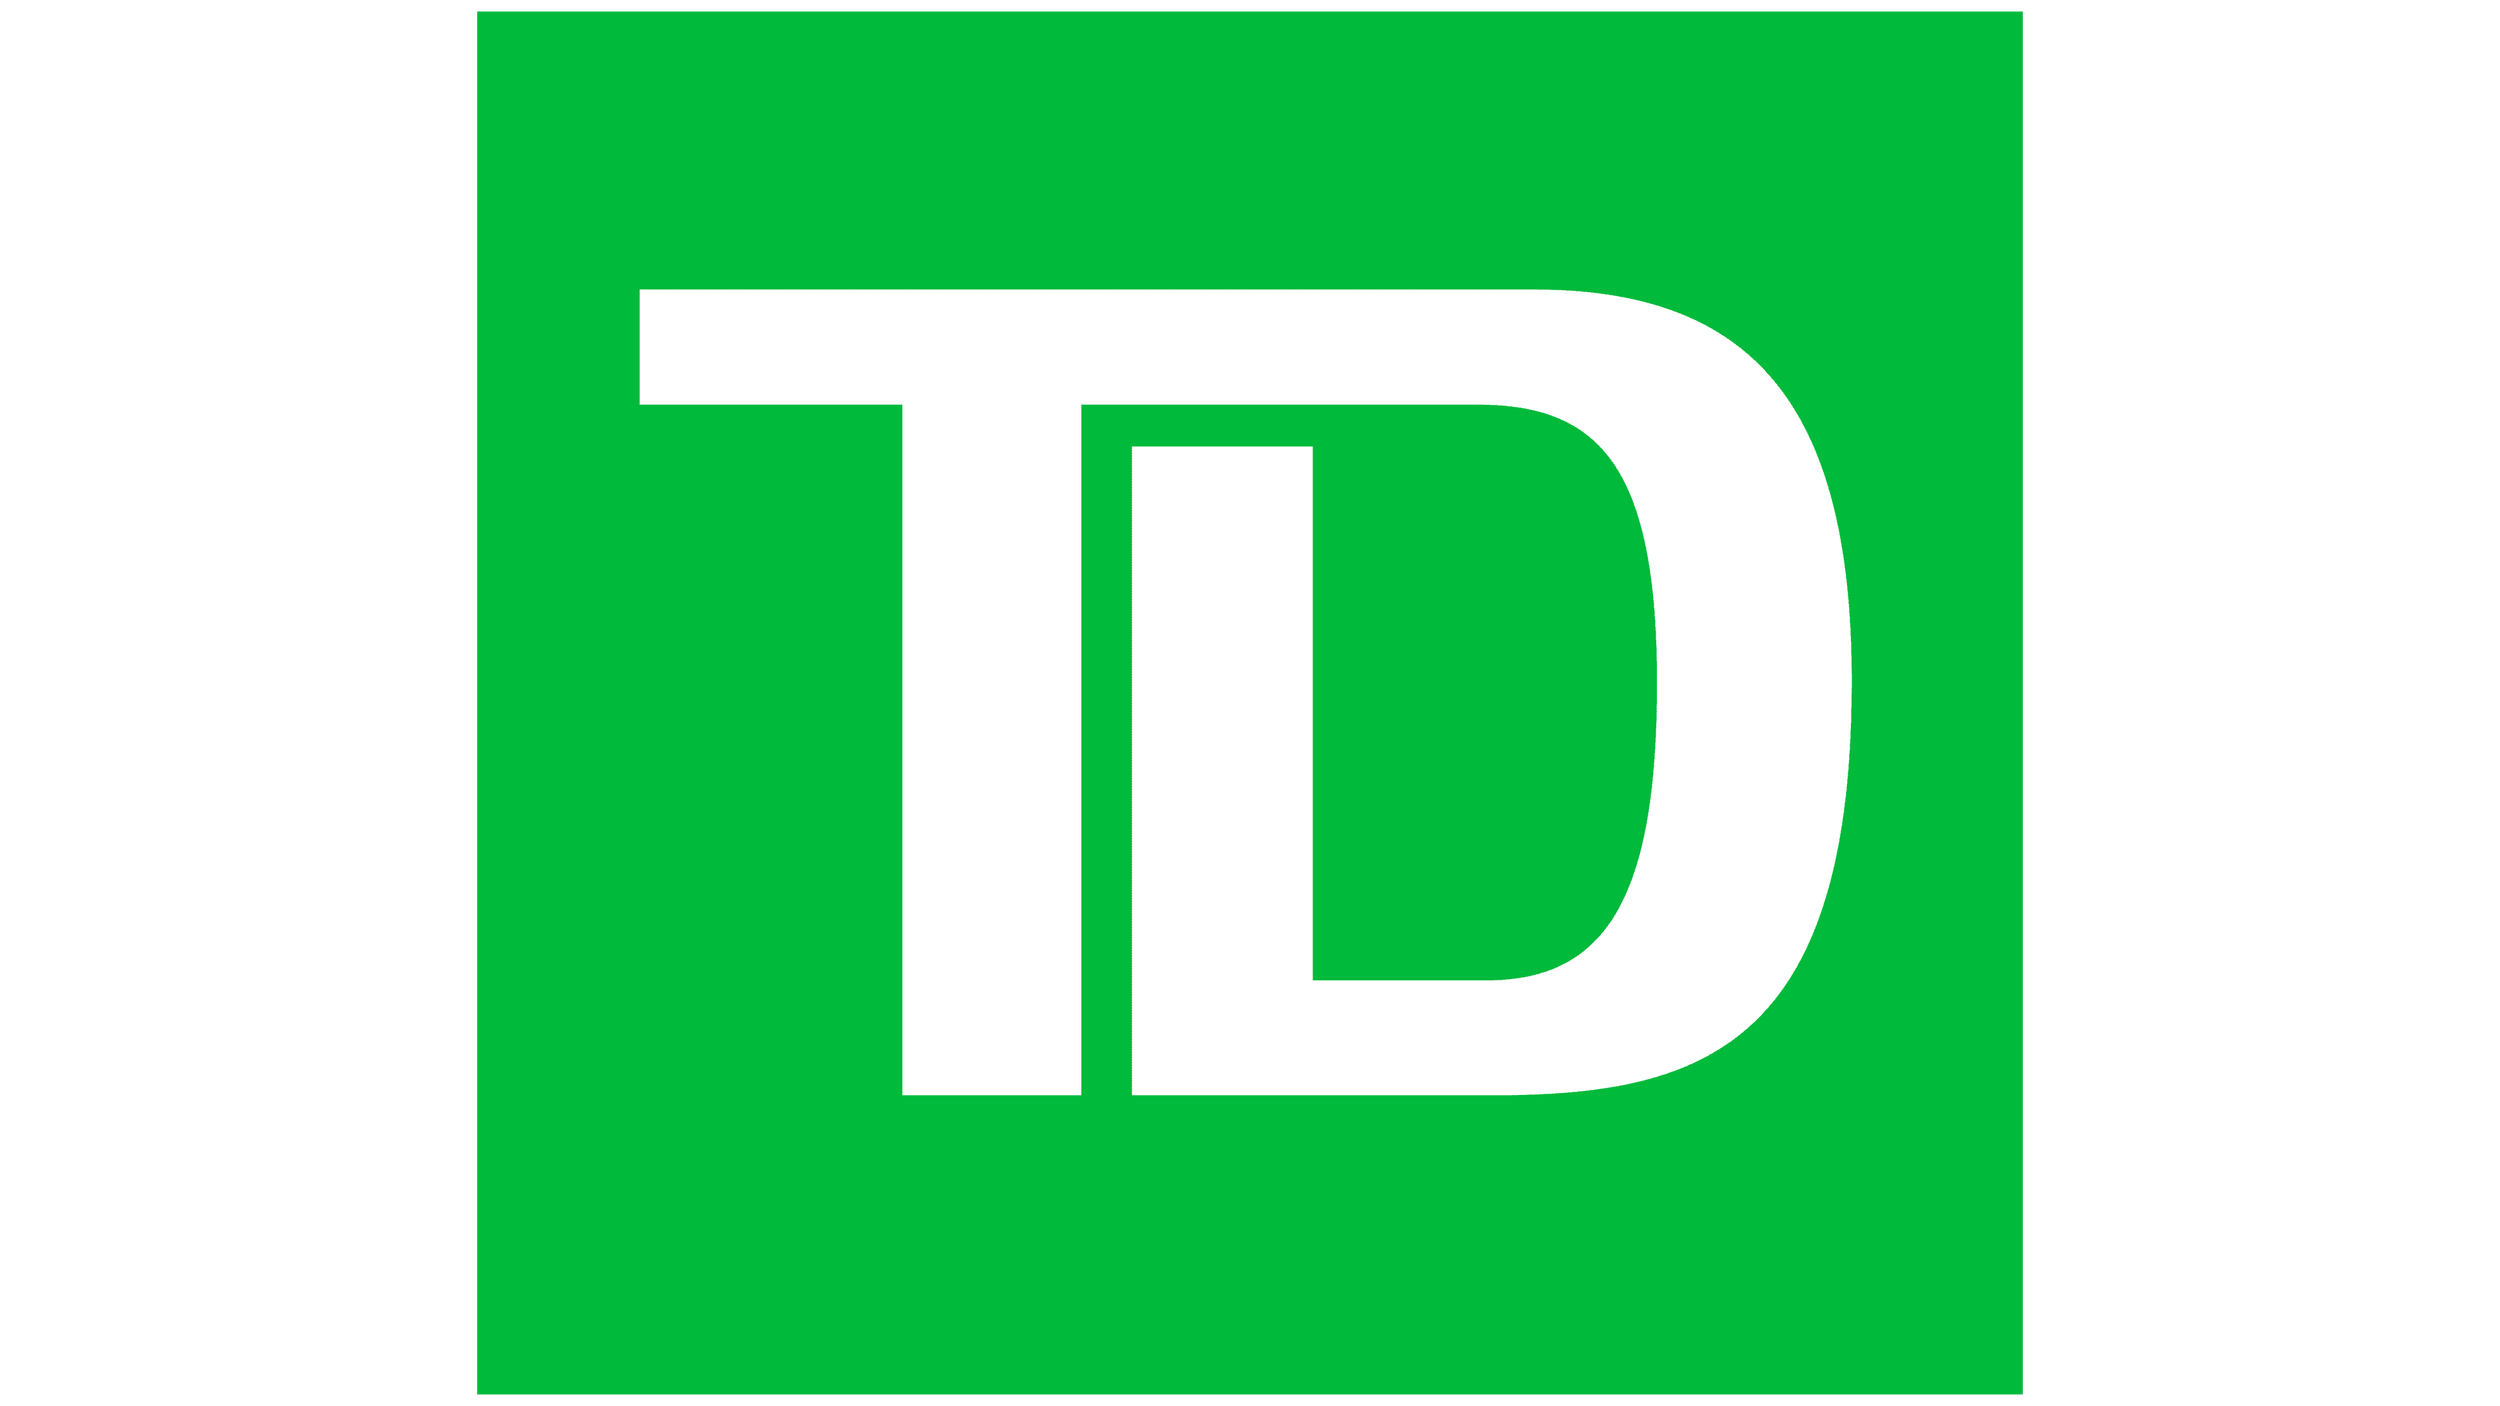 TD-Toronto-Dominion-Bank-Logo-2019-present.png